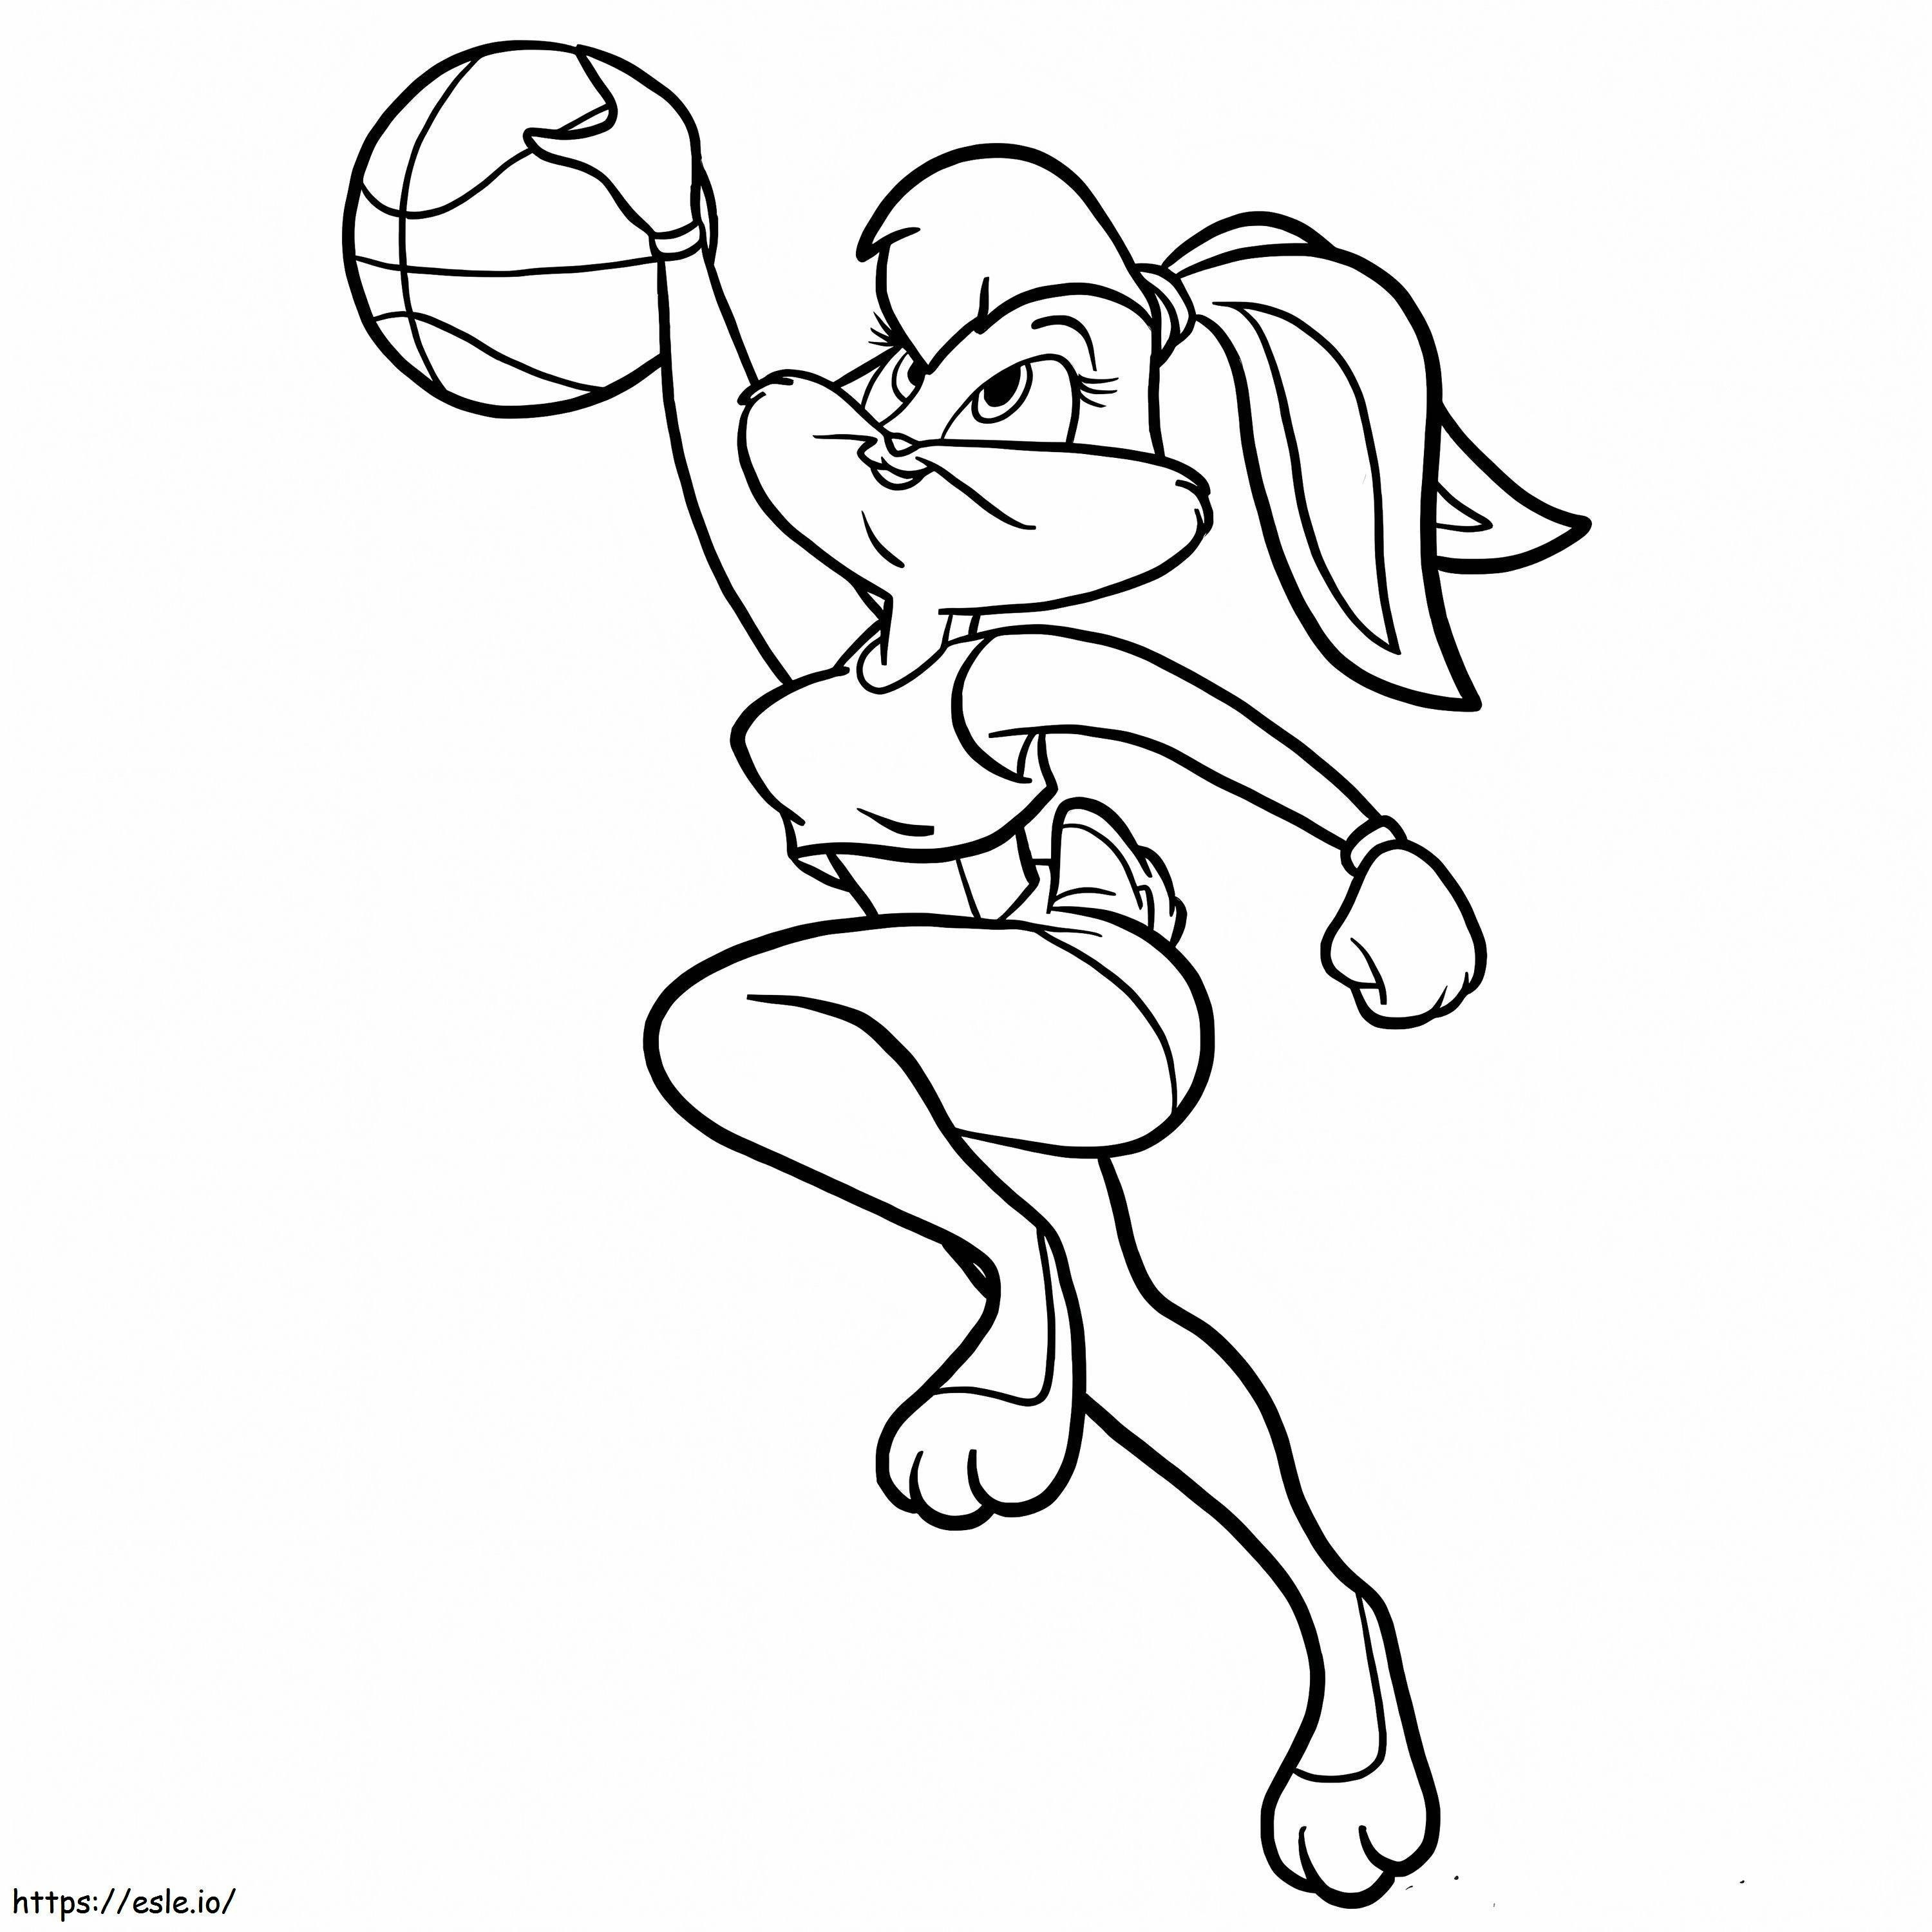 Looney Tunes Lola Bunny spielt Basketball ausmalbilder